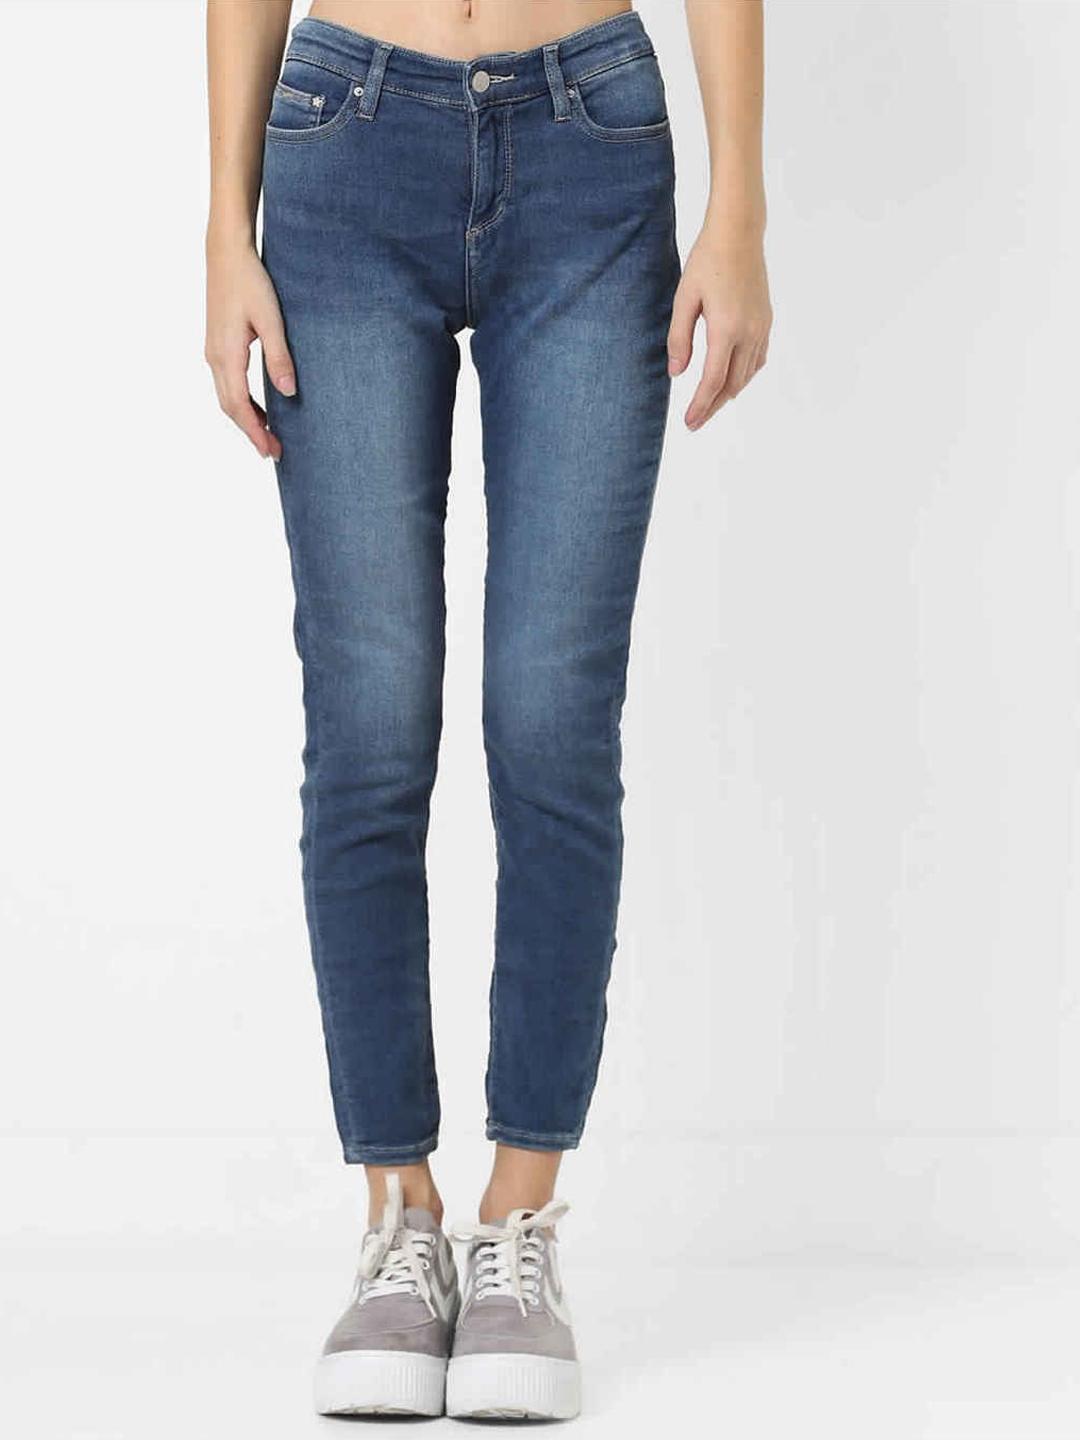 Women's skinny fit medium wash Star motion jeans